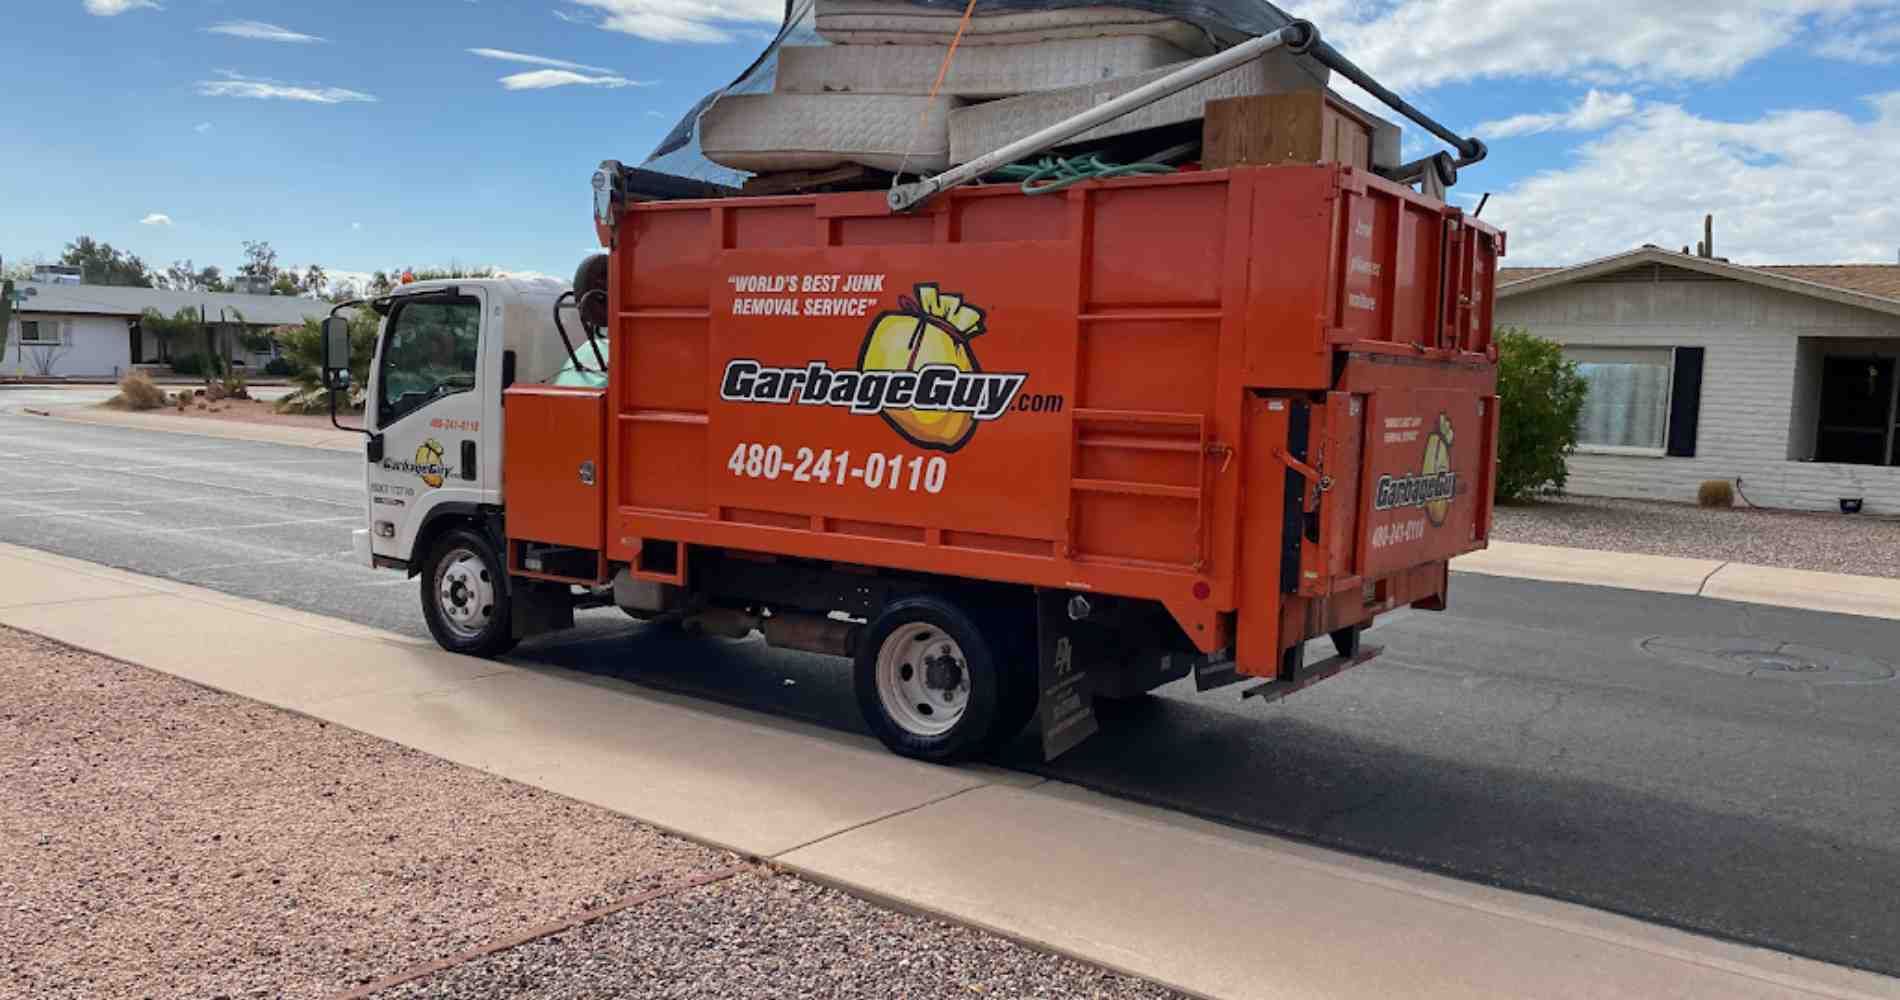 Curbside Trash Pickup in Tempe, AZ